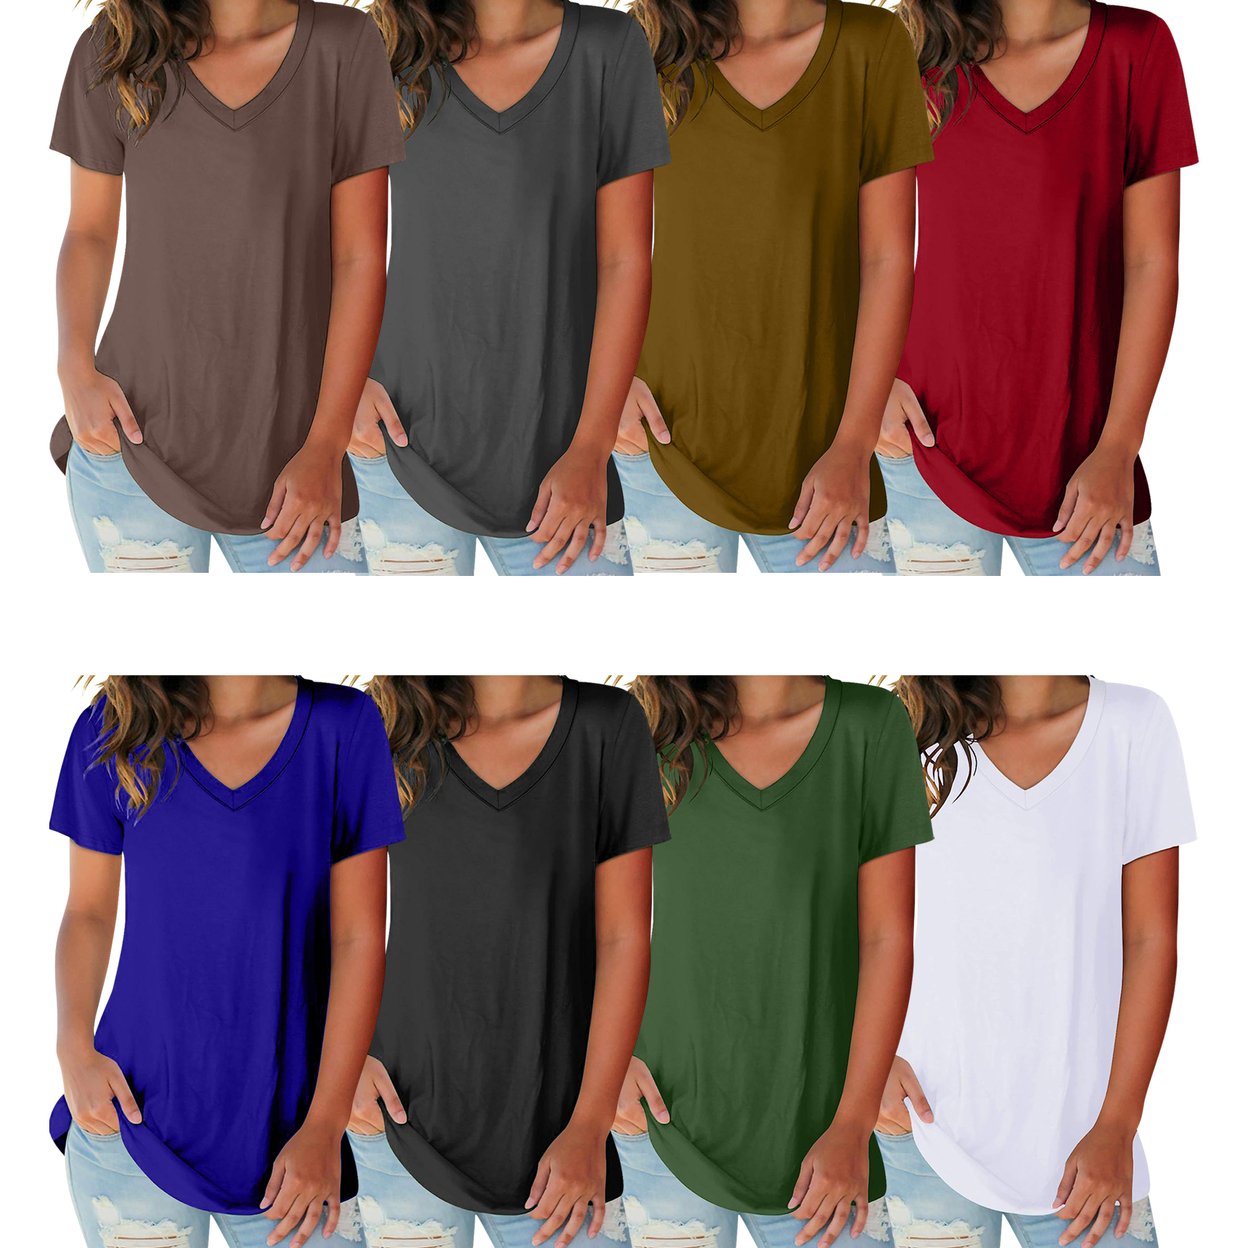 5-Pack: Women's Ultra Soft Smooth Cotton Blend Basic V-Neck Short Sleeve Shirts - Xx-large